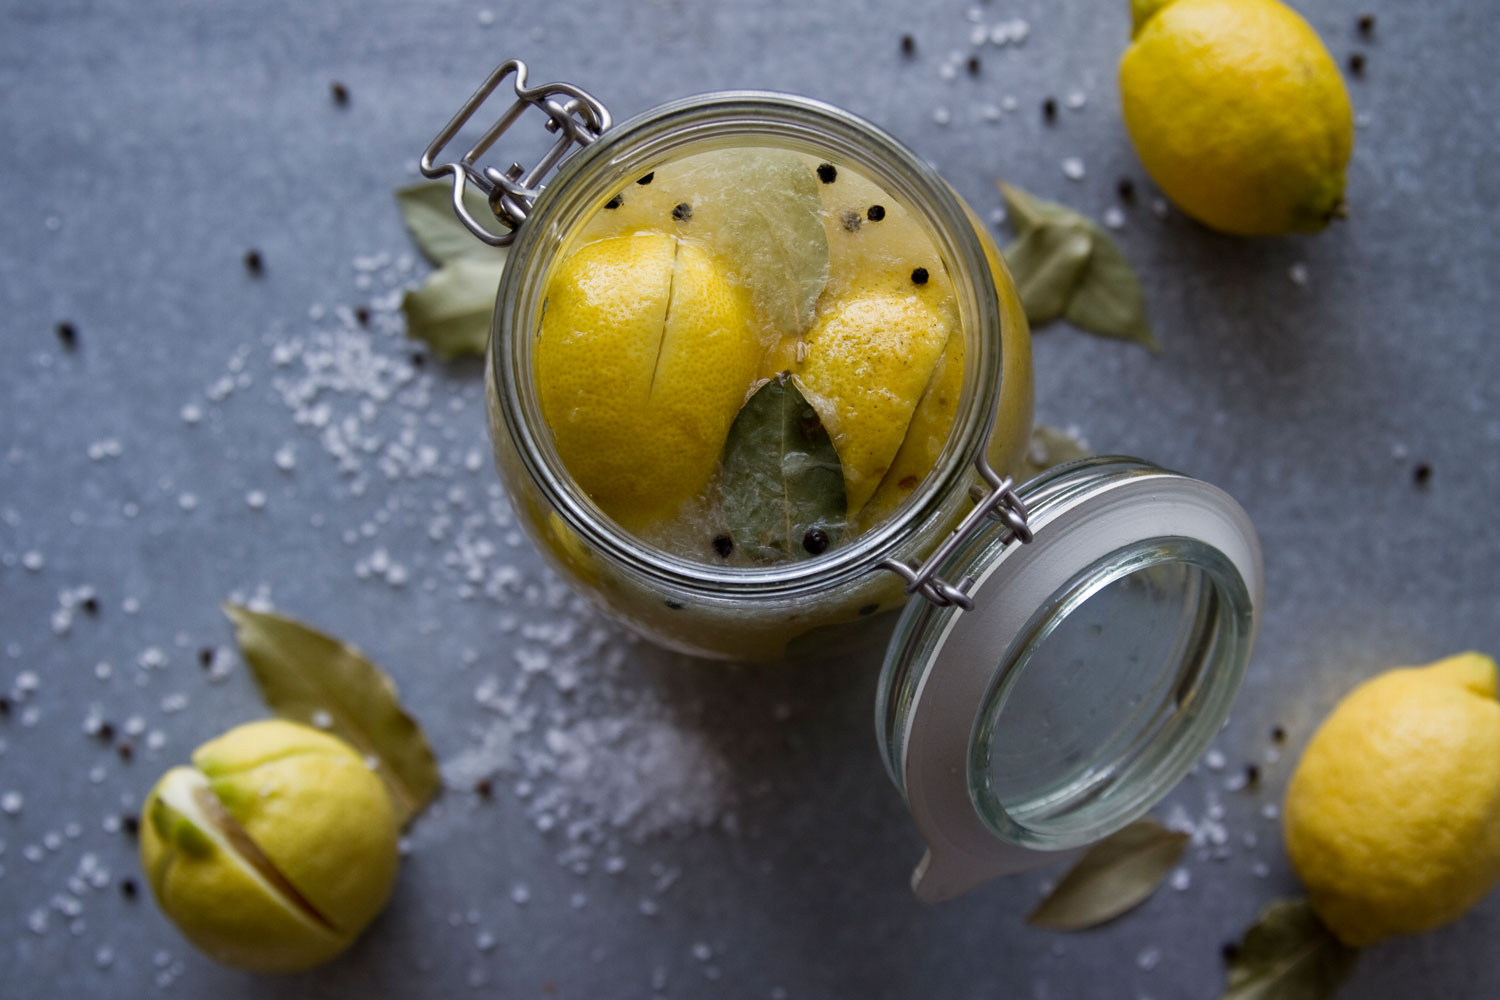 Marokkanische eingelegte Zitronen — nom-nom food studio